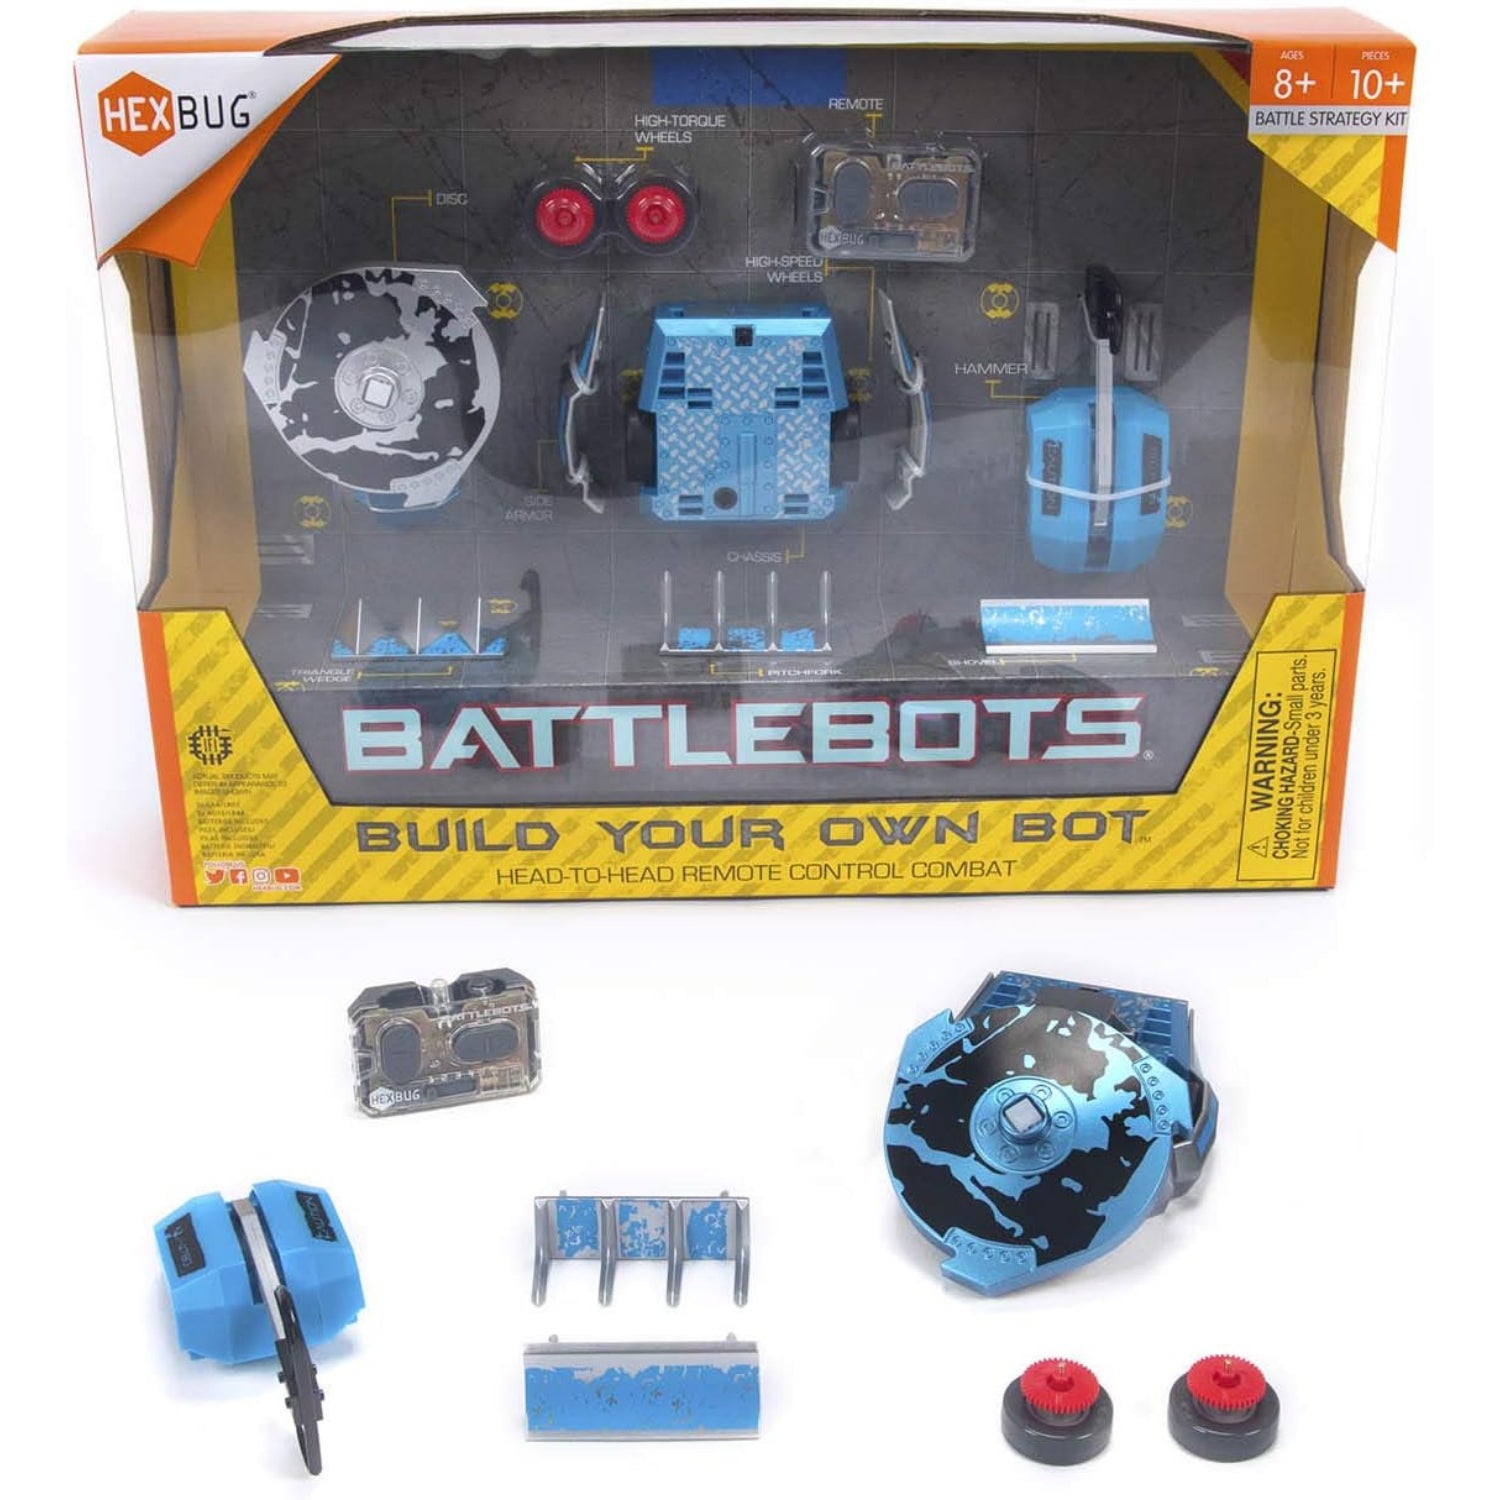 HEXBUG BattleBots Build Your Own Bot - Random Color